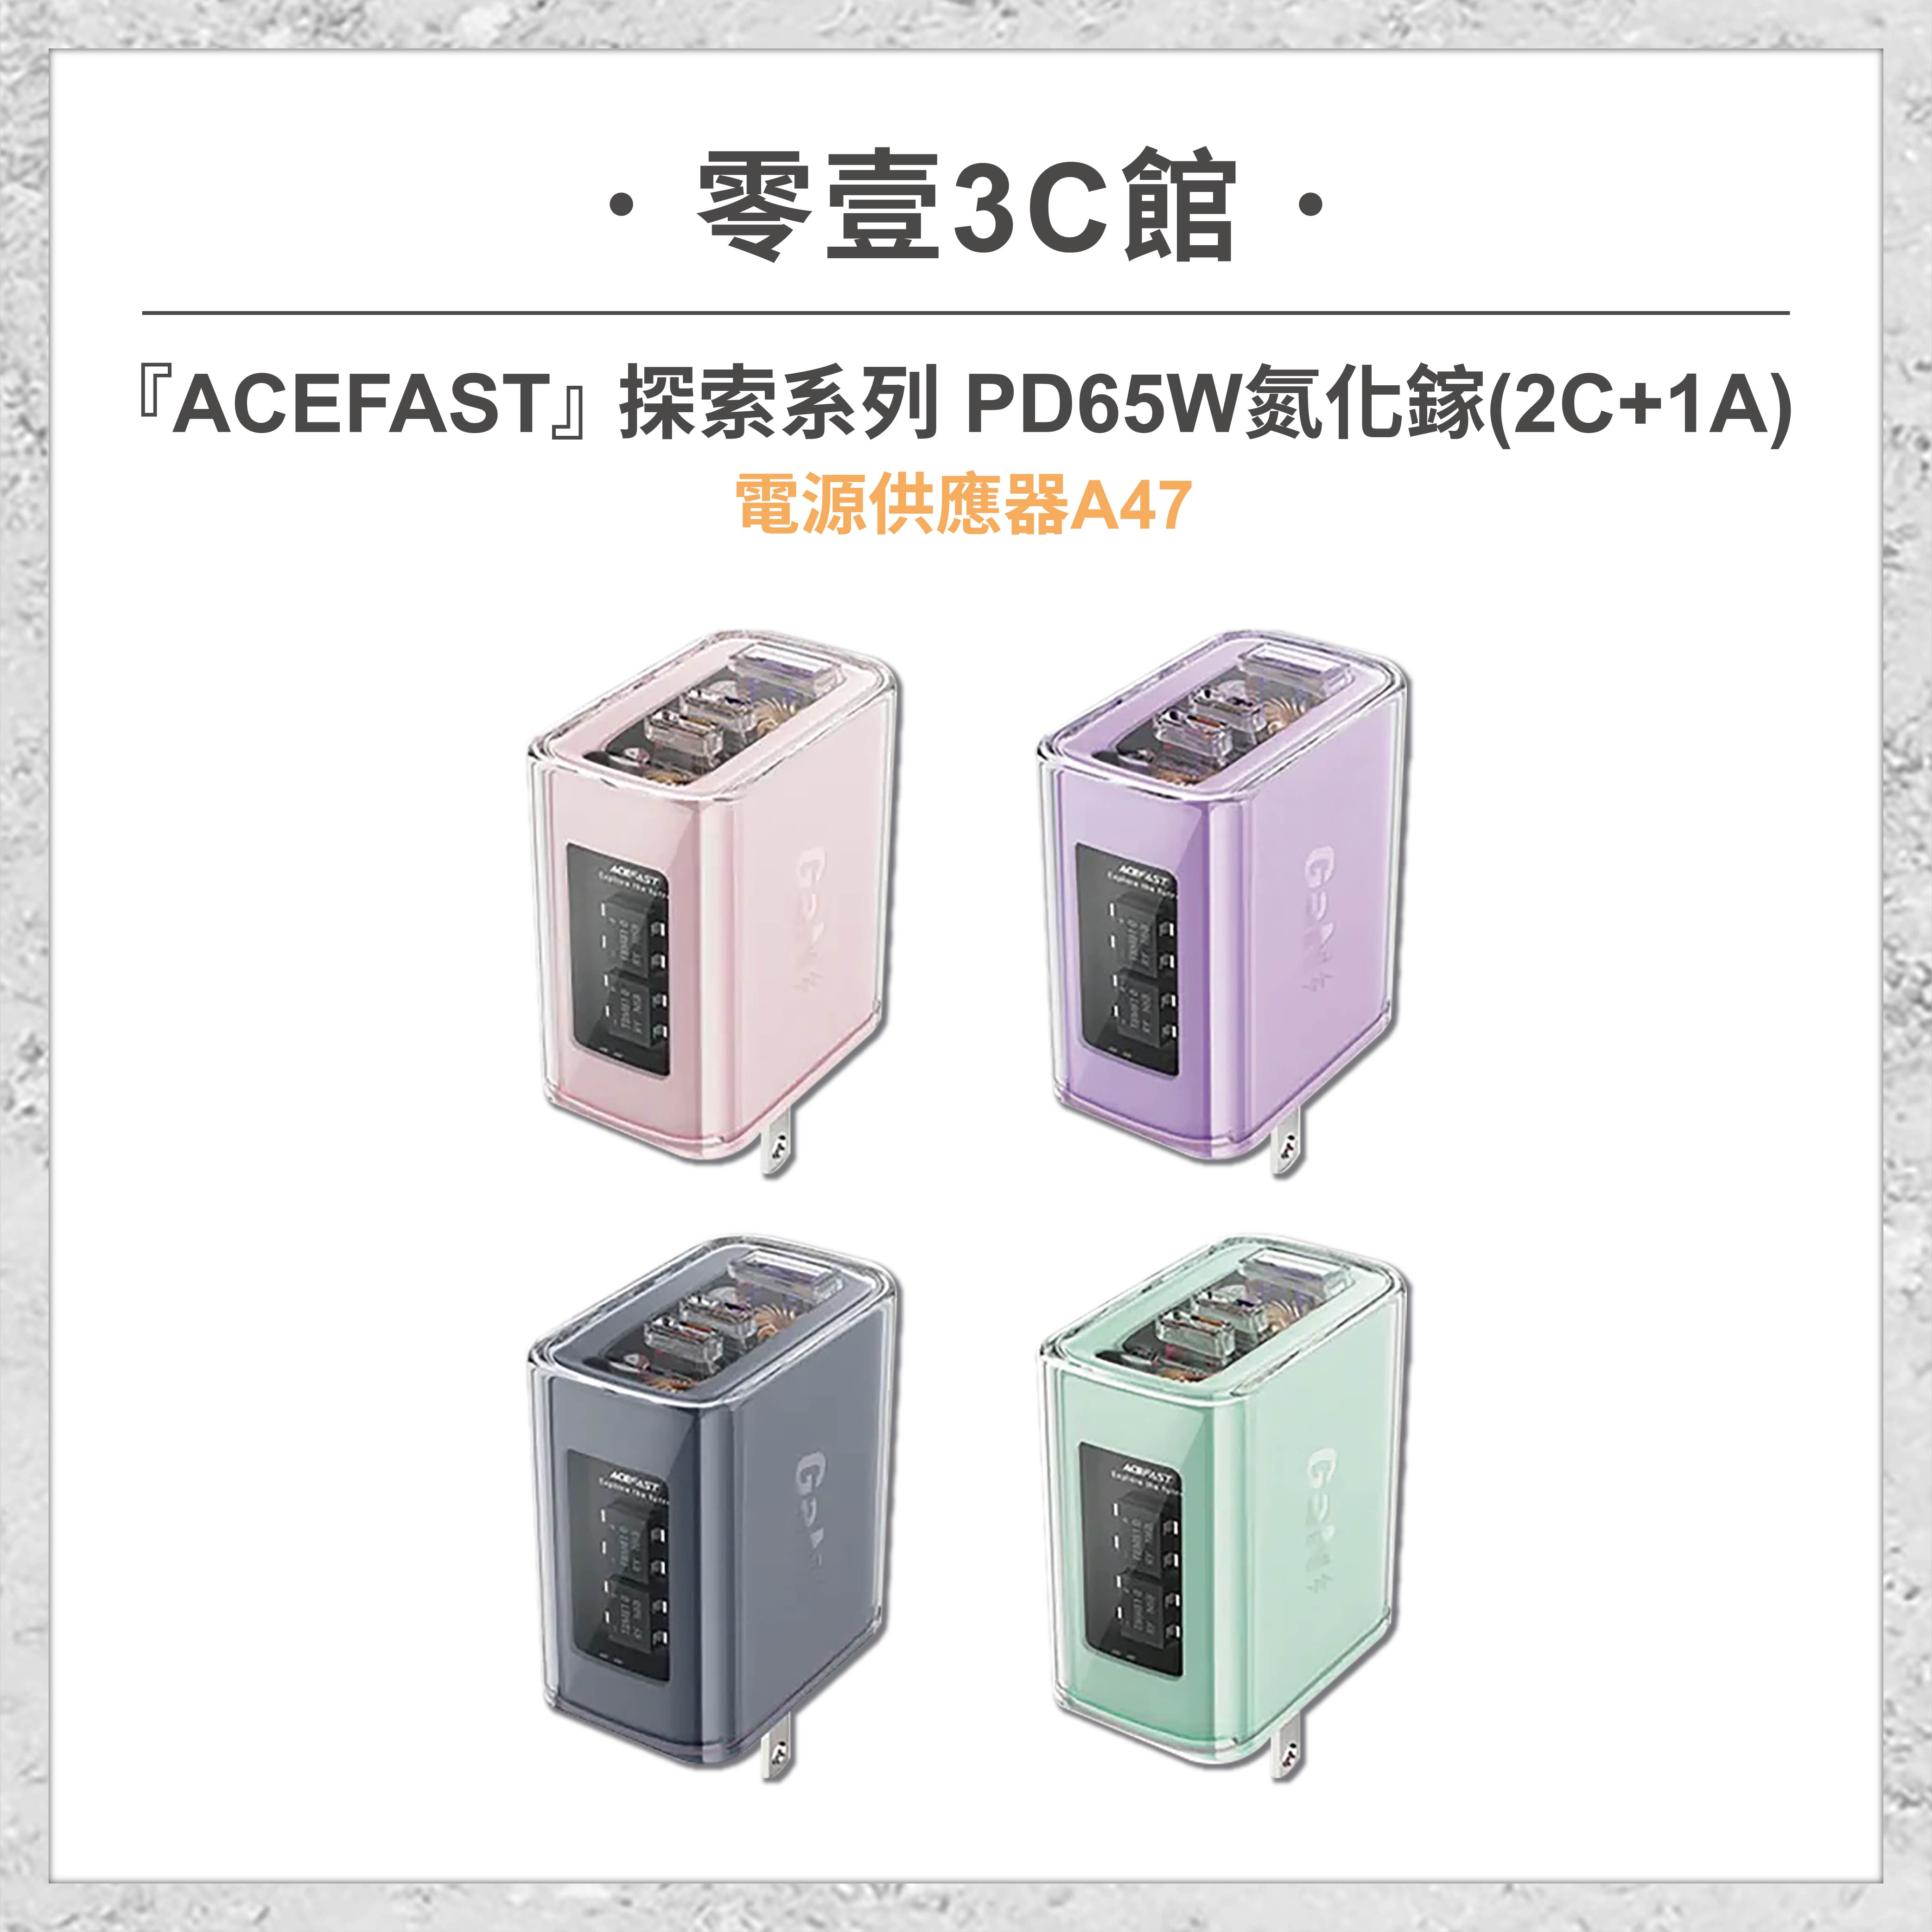 『ACEFAST』探索系列 PD65W氮化鎵(2C+1A)電源供應器A47 快充充電器 充電頭